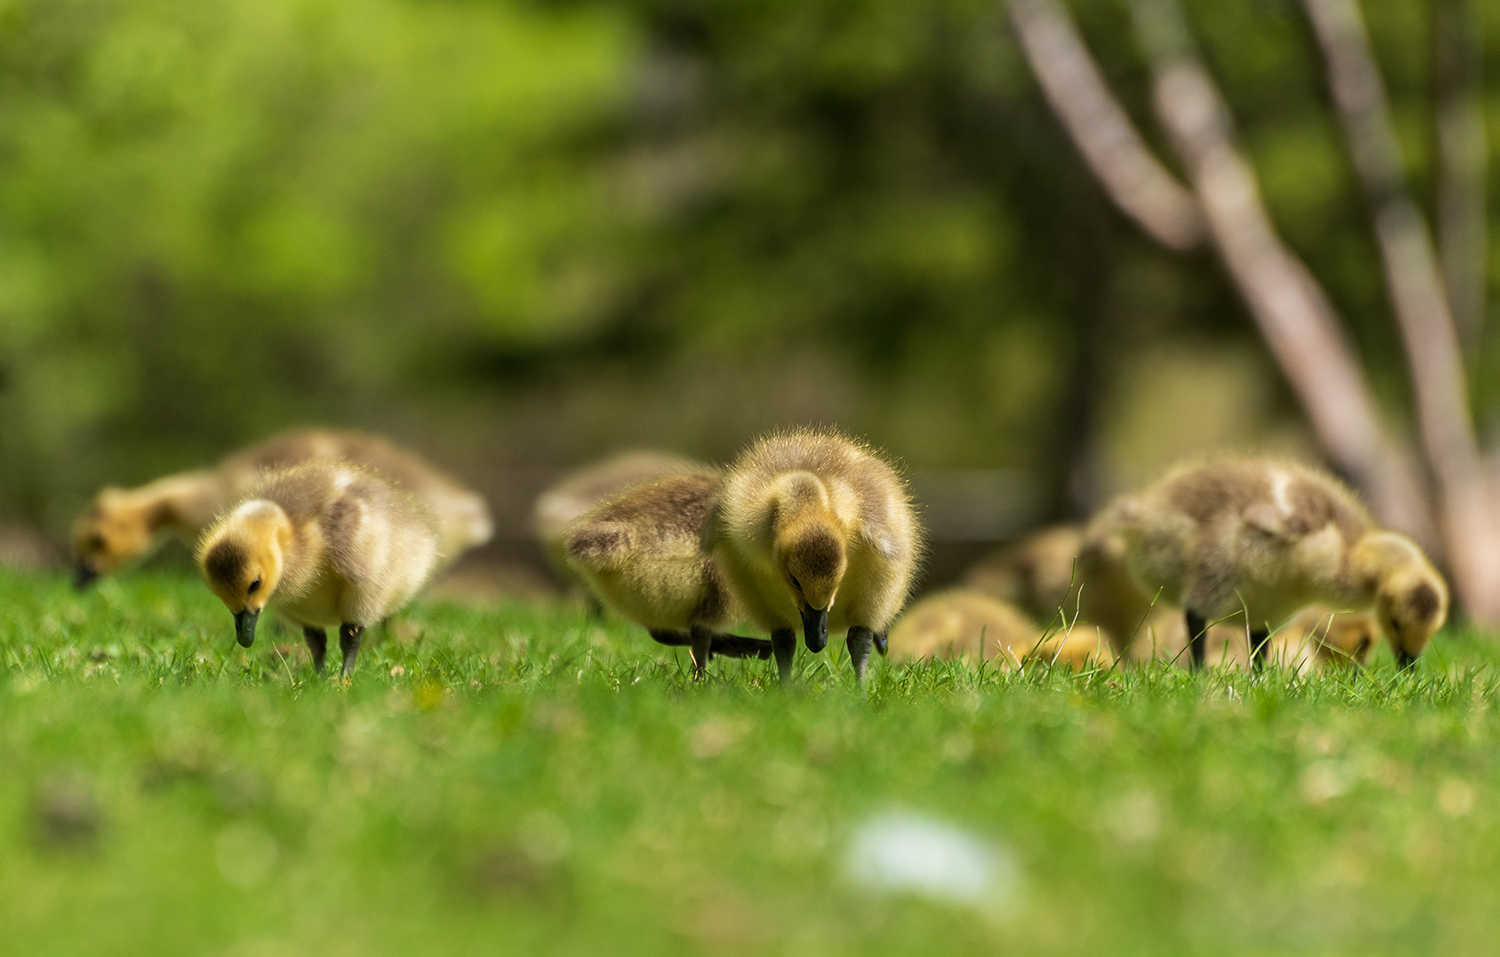 Kamloops Fauna cute ducklings looking for food in the grass